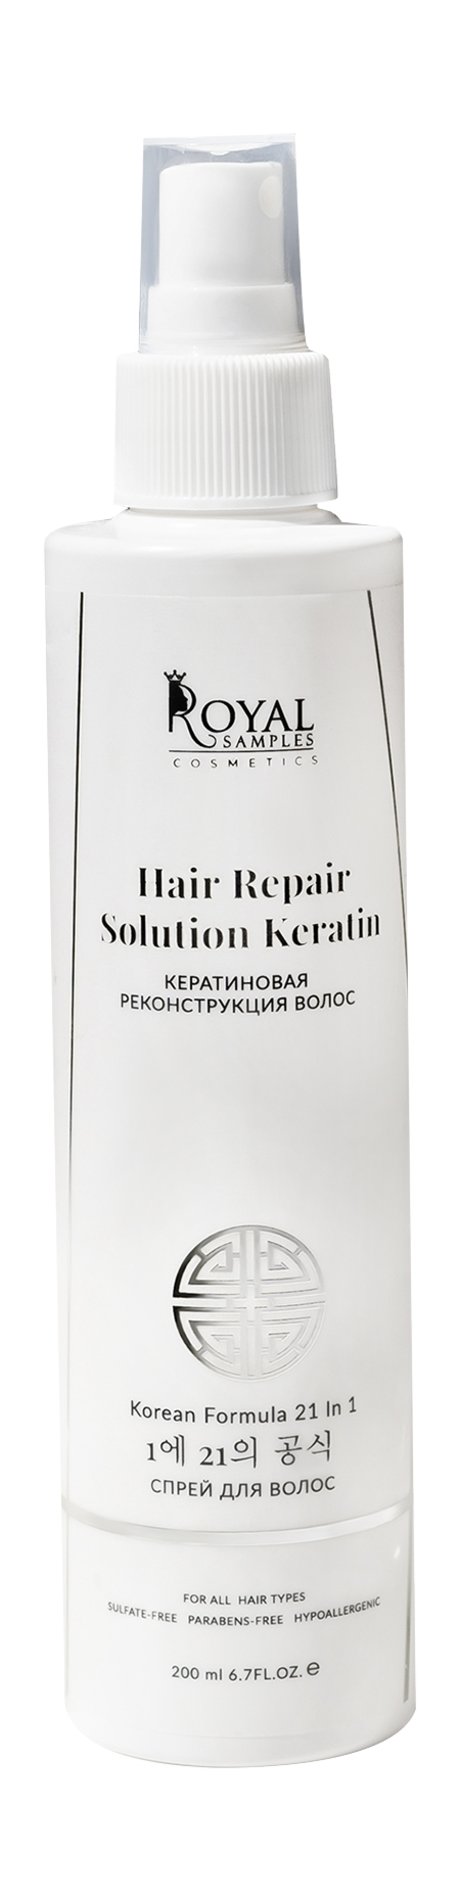 royal samples hair repair solution keratin spray